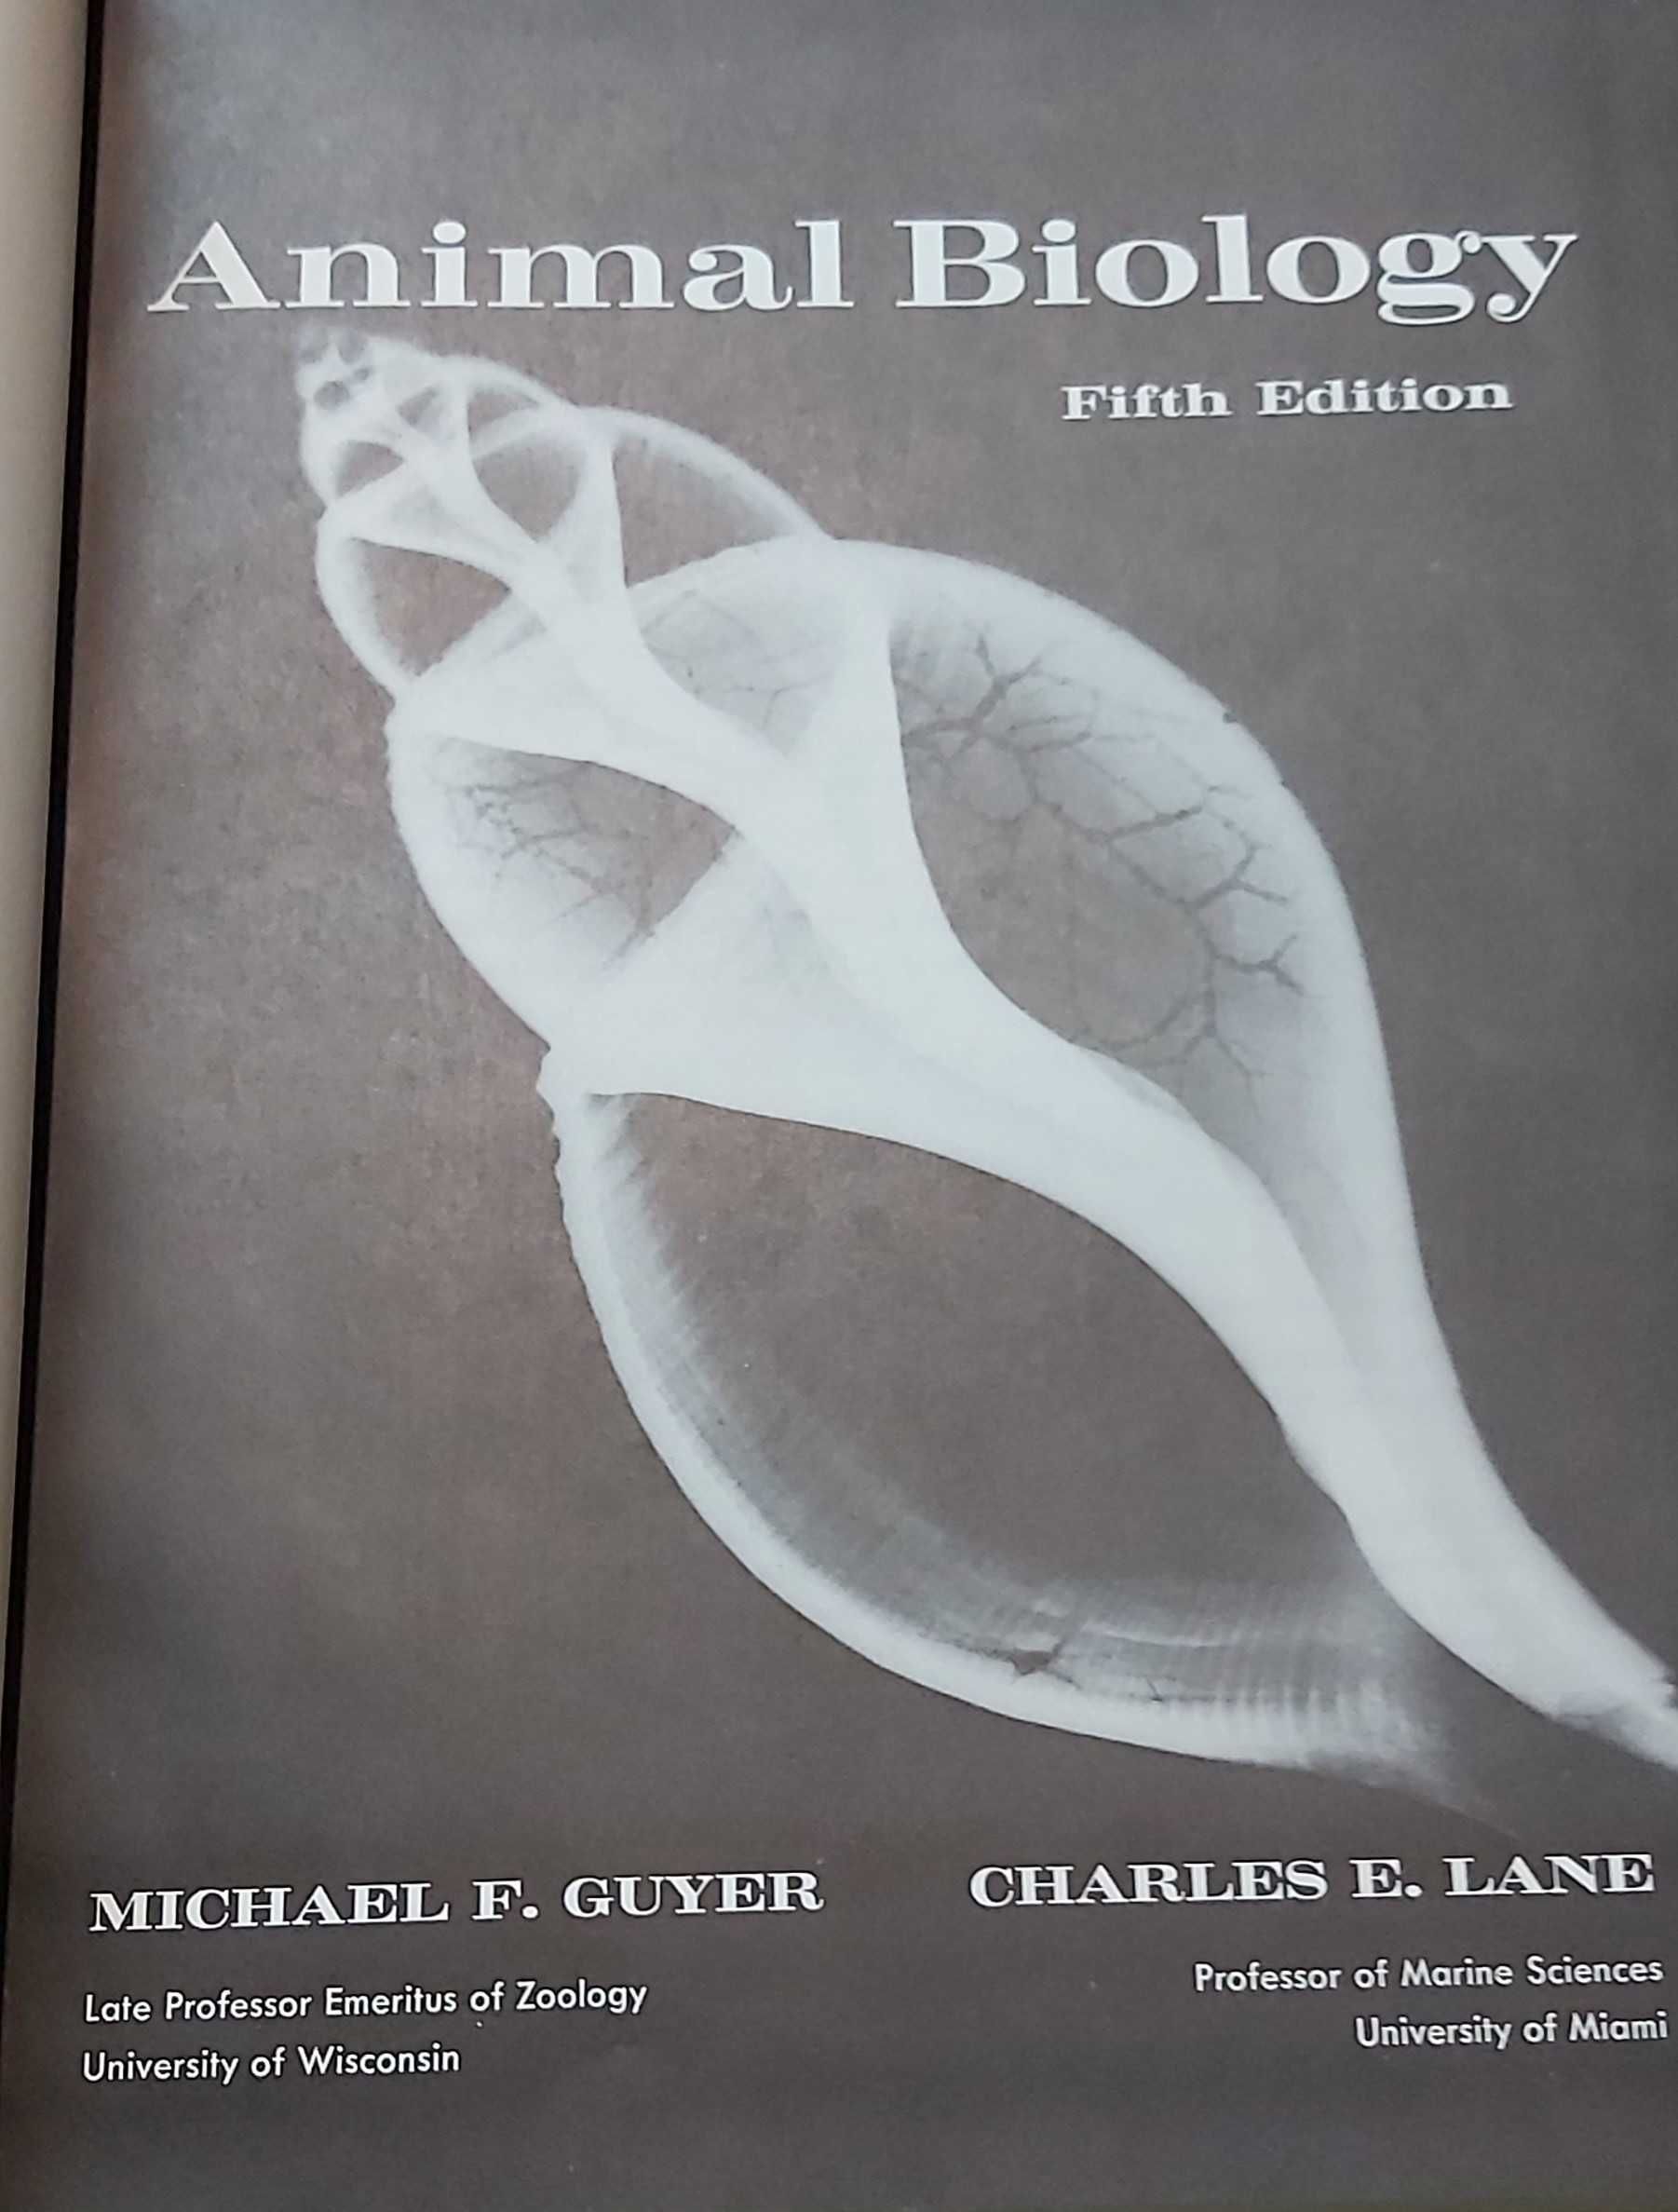 Livros Biologia Animal  -  Animal Biology por Guyer and Lane 5ª E 1964